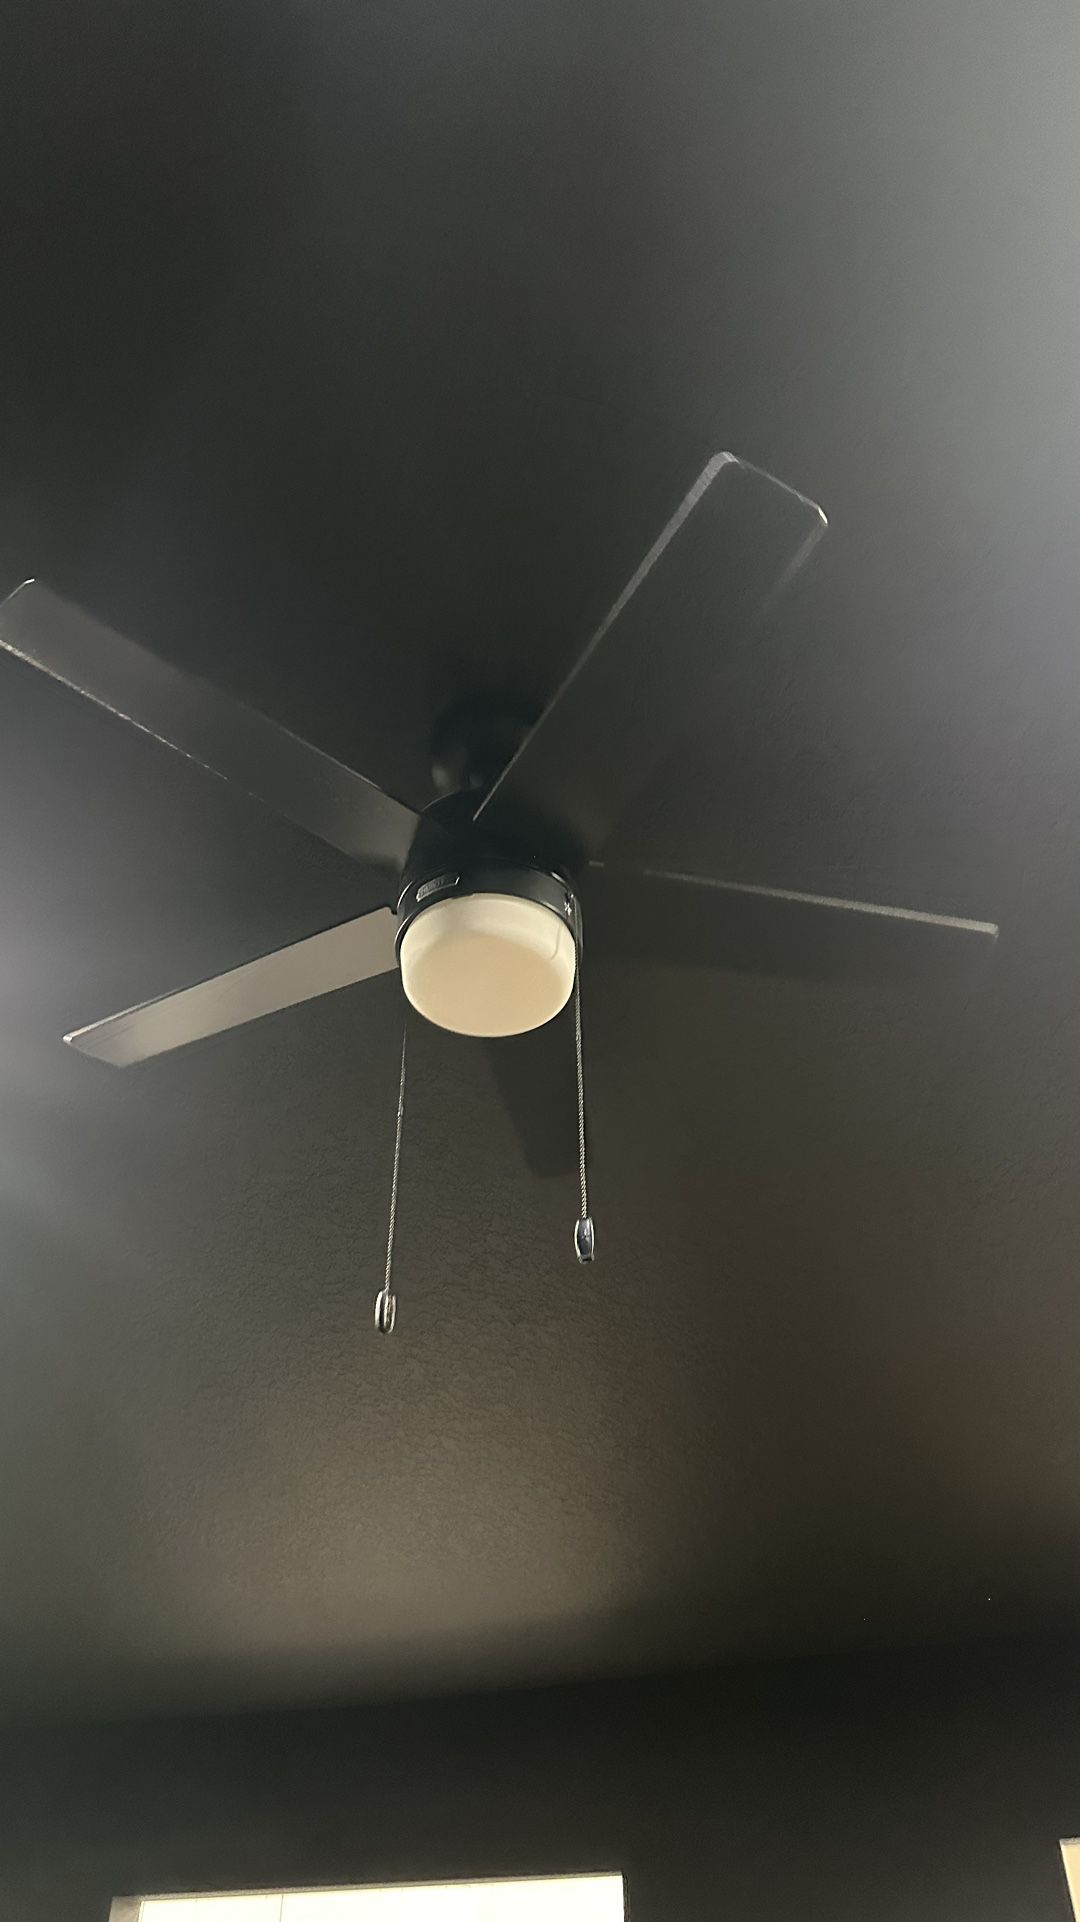 Black Ceiling fan With Light